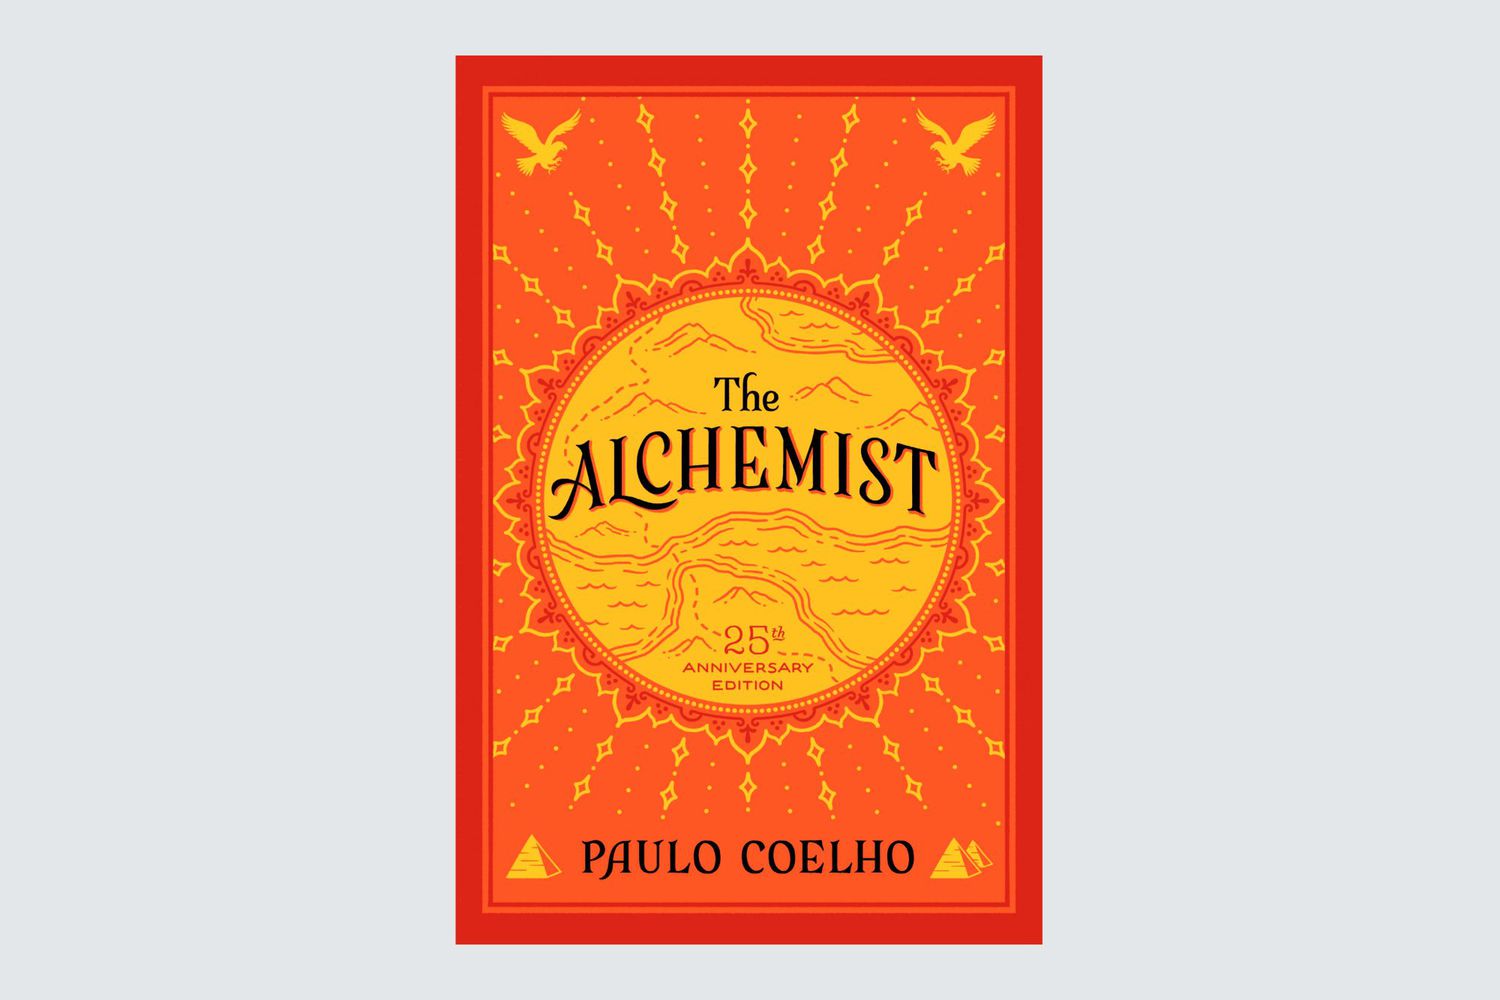 The Alchemist, by Paulo Coelho